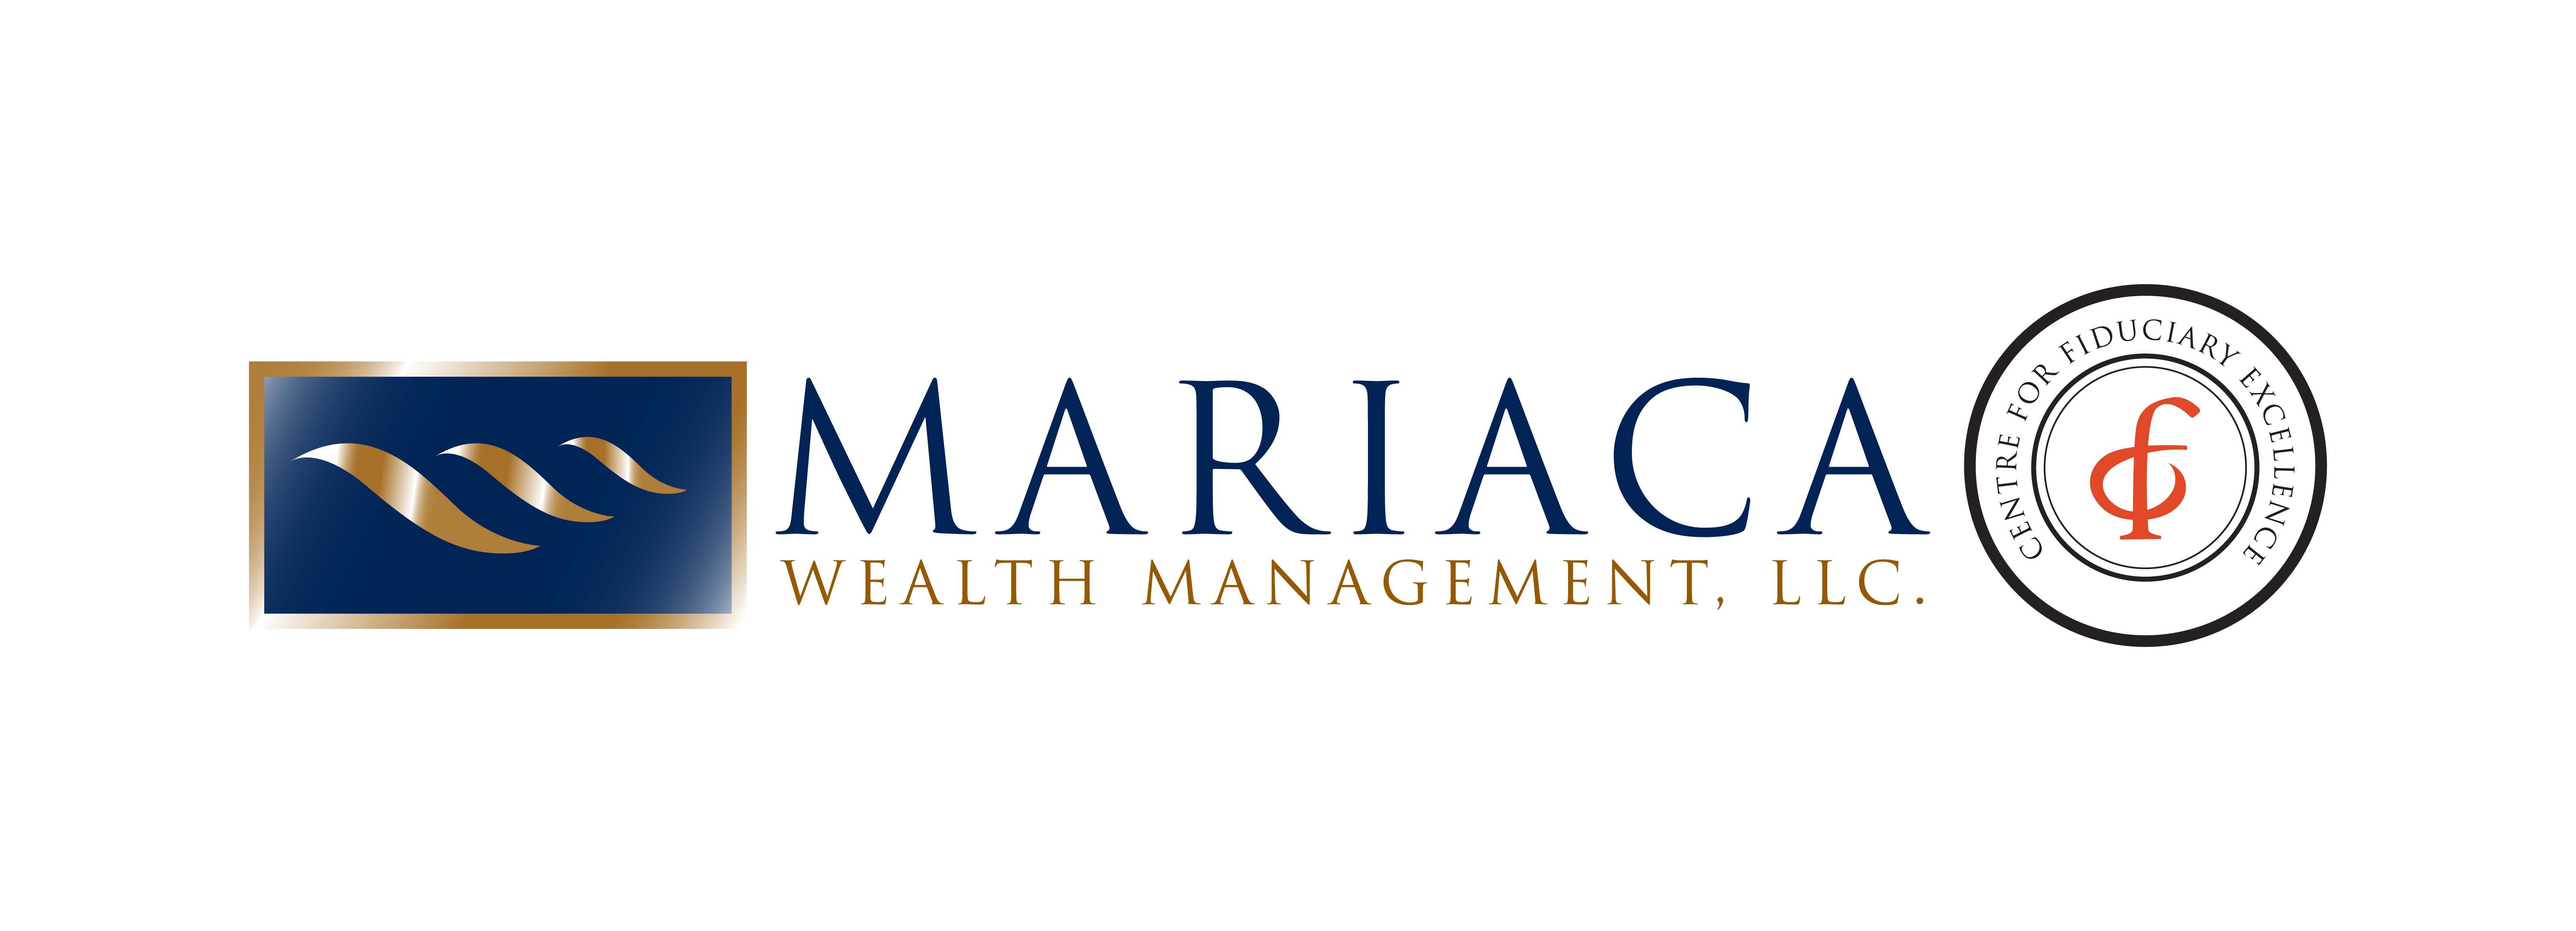 Mariaca Wealth Management, LLC.